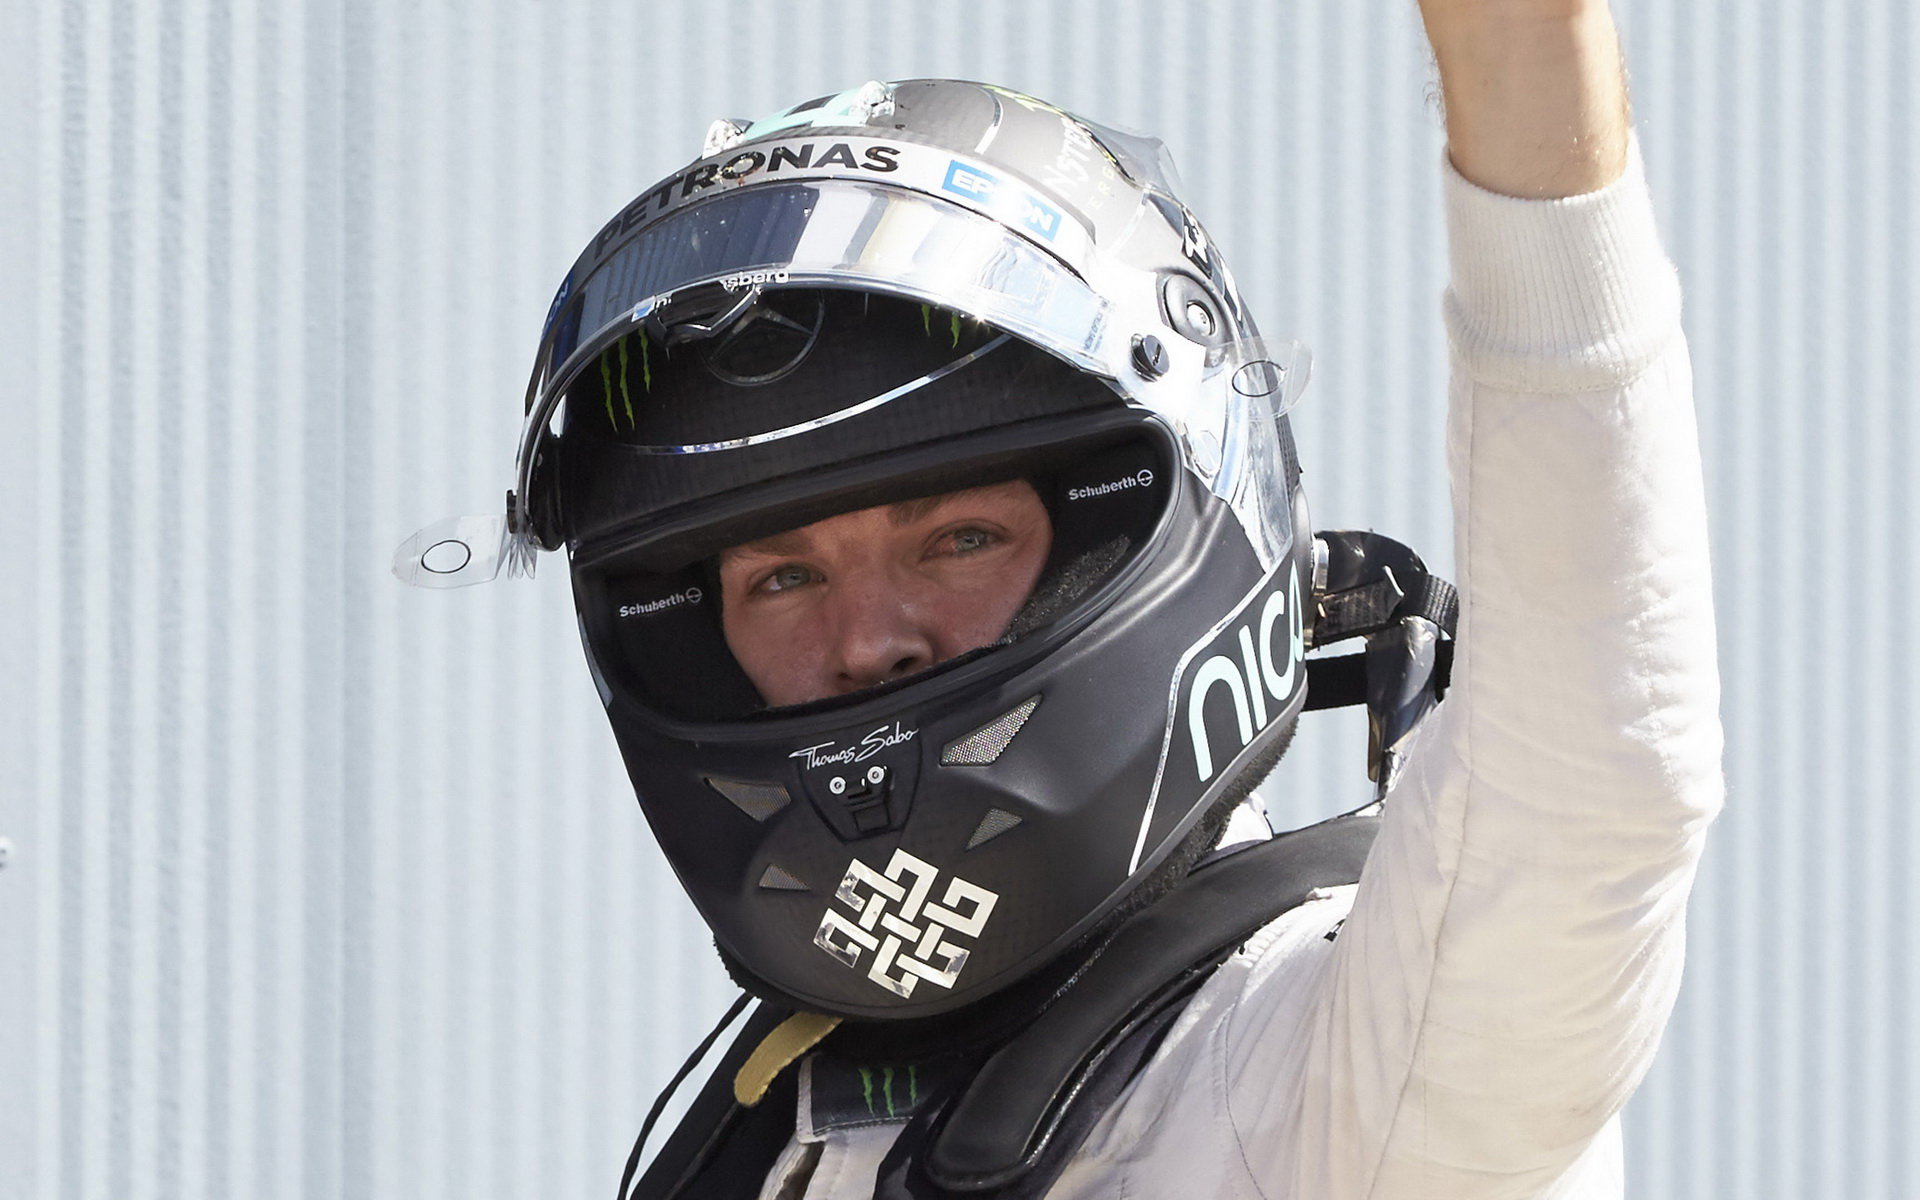 Nico Rosberg, GP Itálie (Monza)